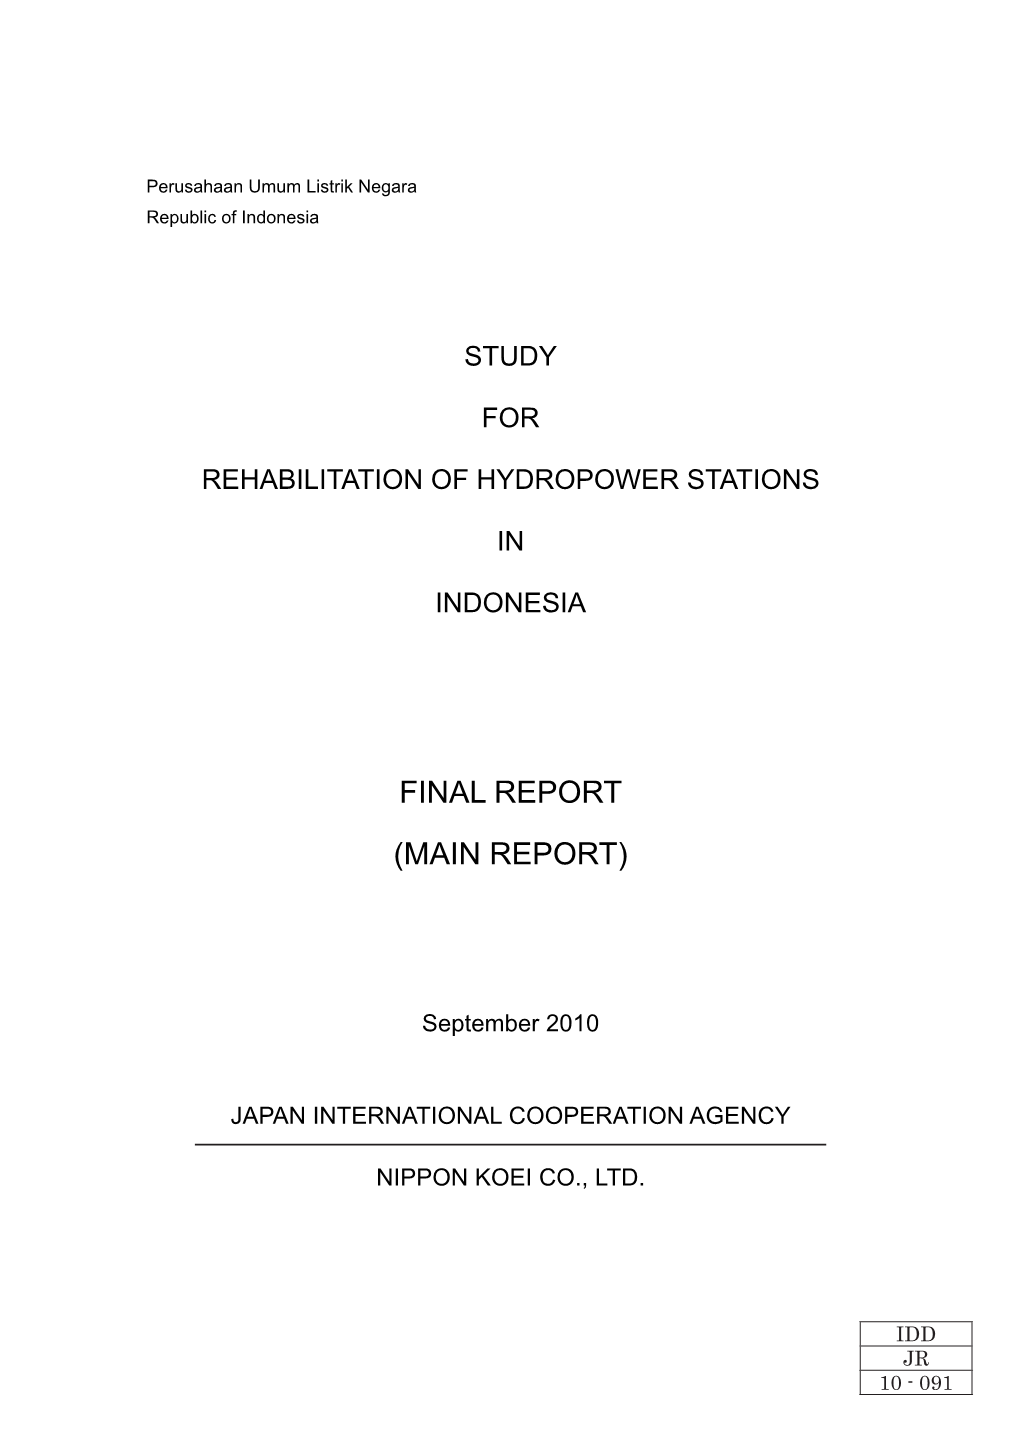 Final Report Final Report (Main Report)